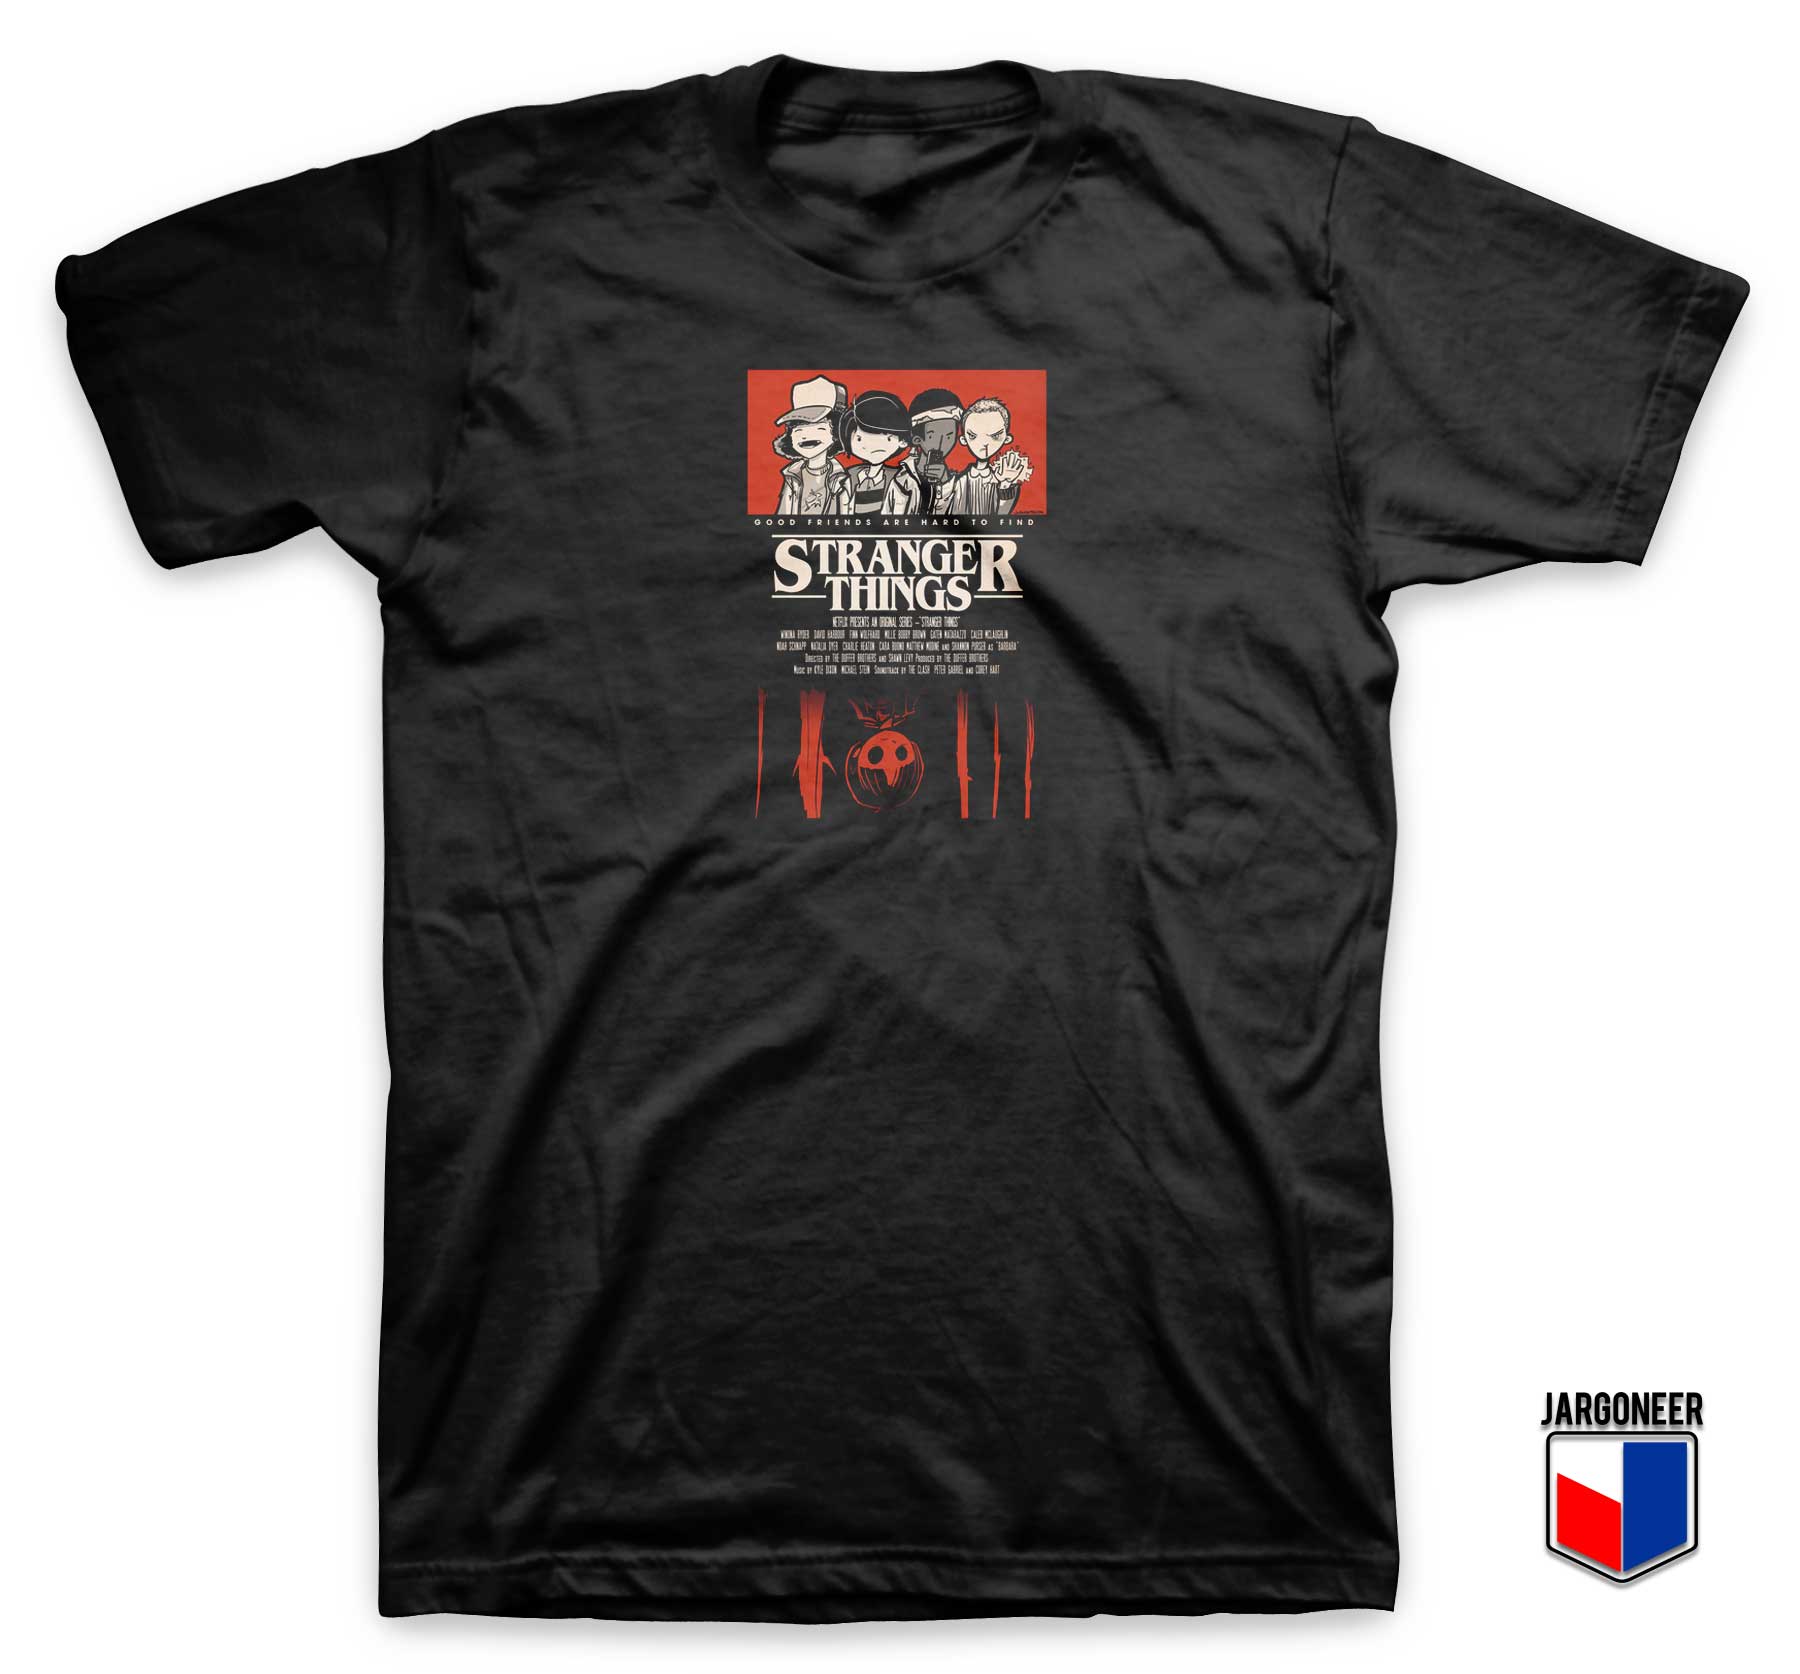 Stranger Things Poster T Shirt - Shop Unique Graphic Cool Shirt Designs